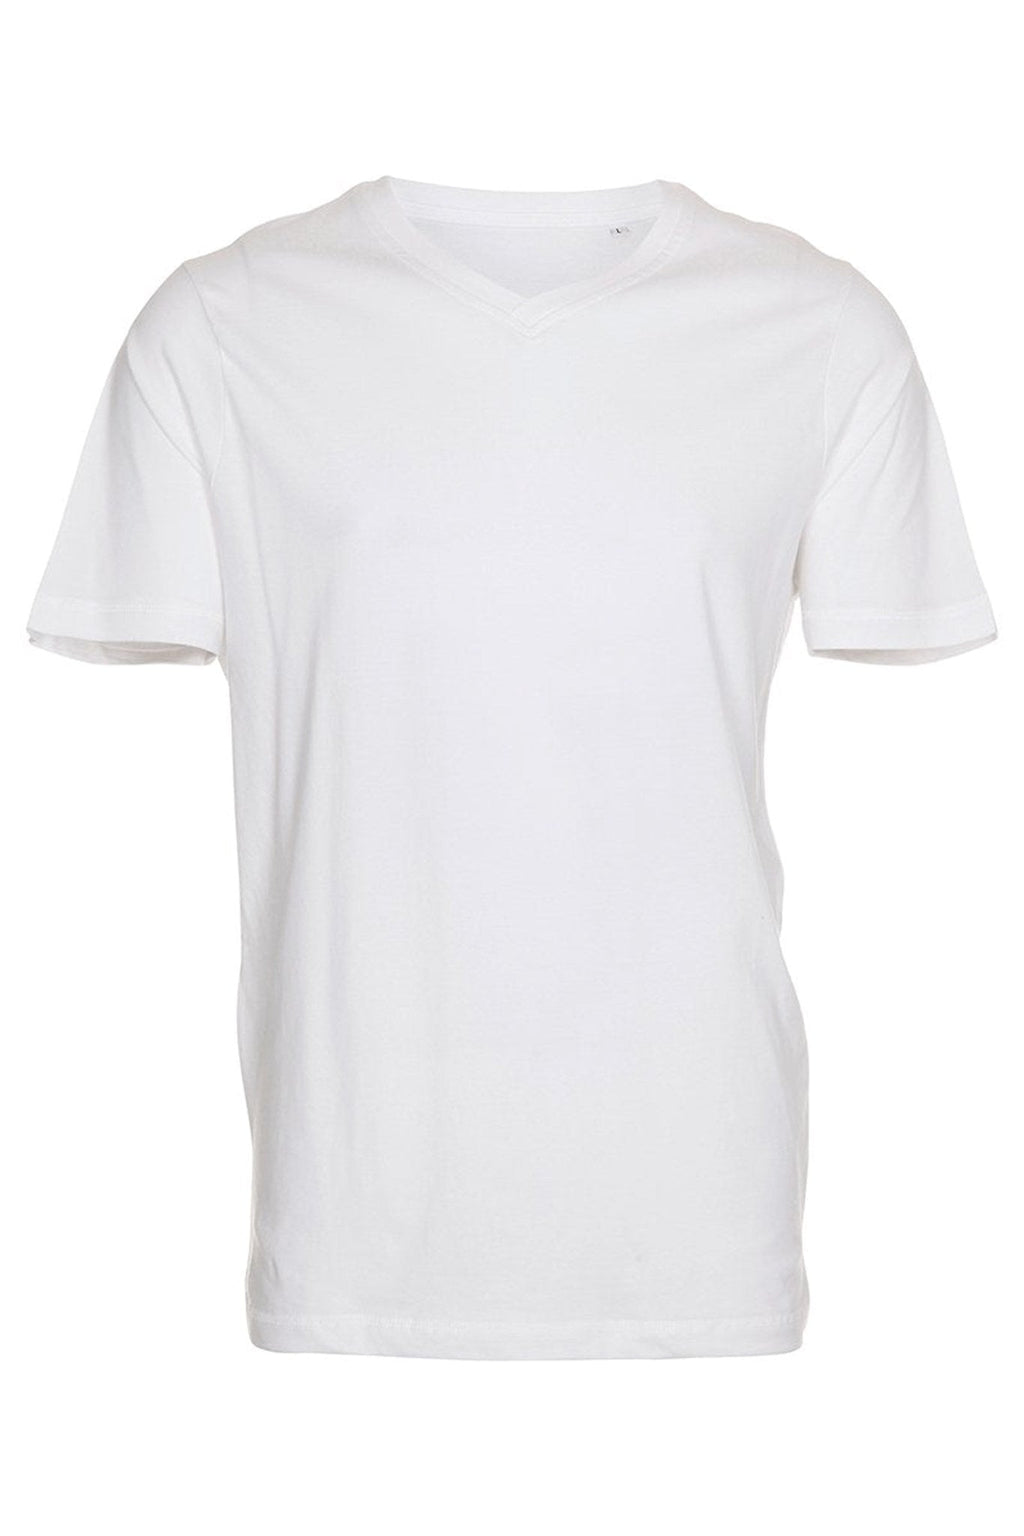 基本vneck T恤 - 白色